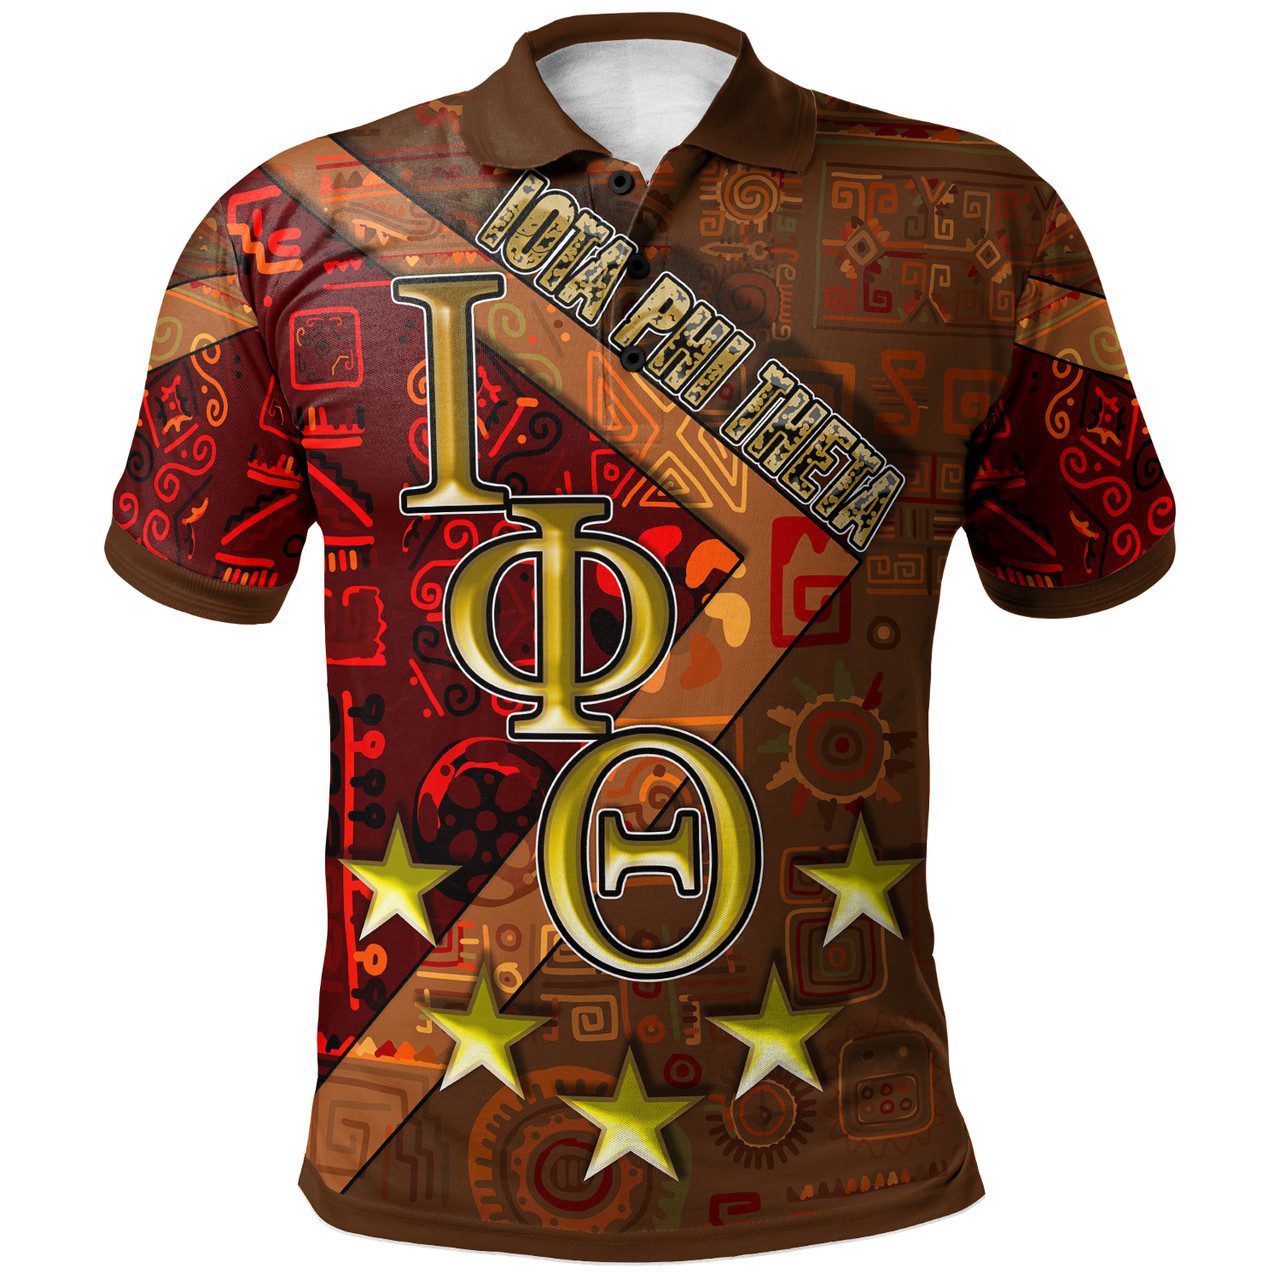 Iota Phi Theta Polo Shirt – Iota Phi Theta Fraternity With Stars Polo Shirt